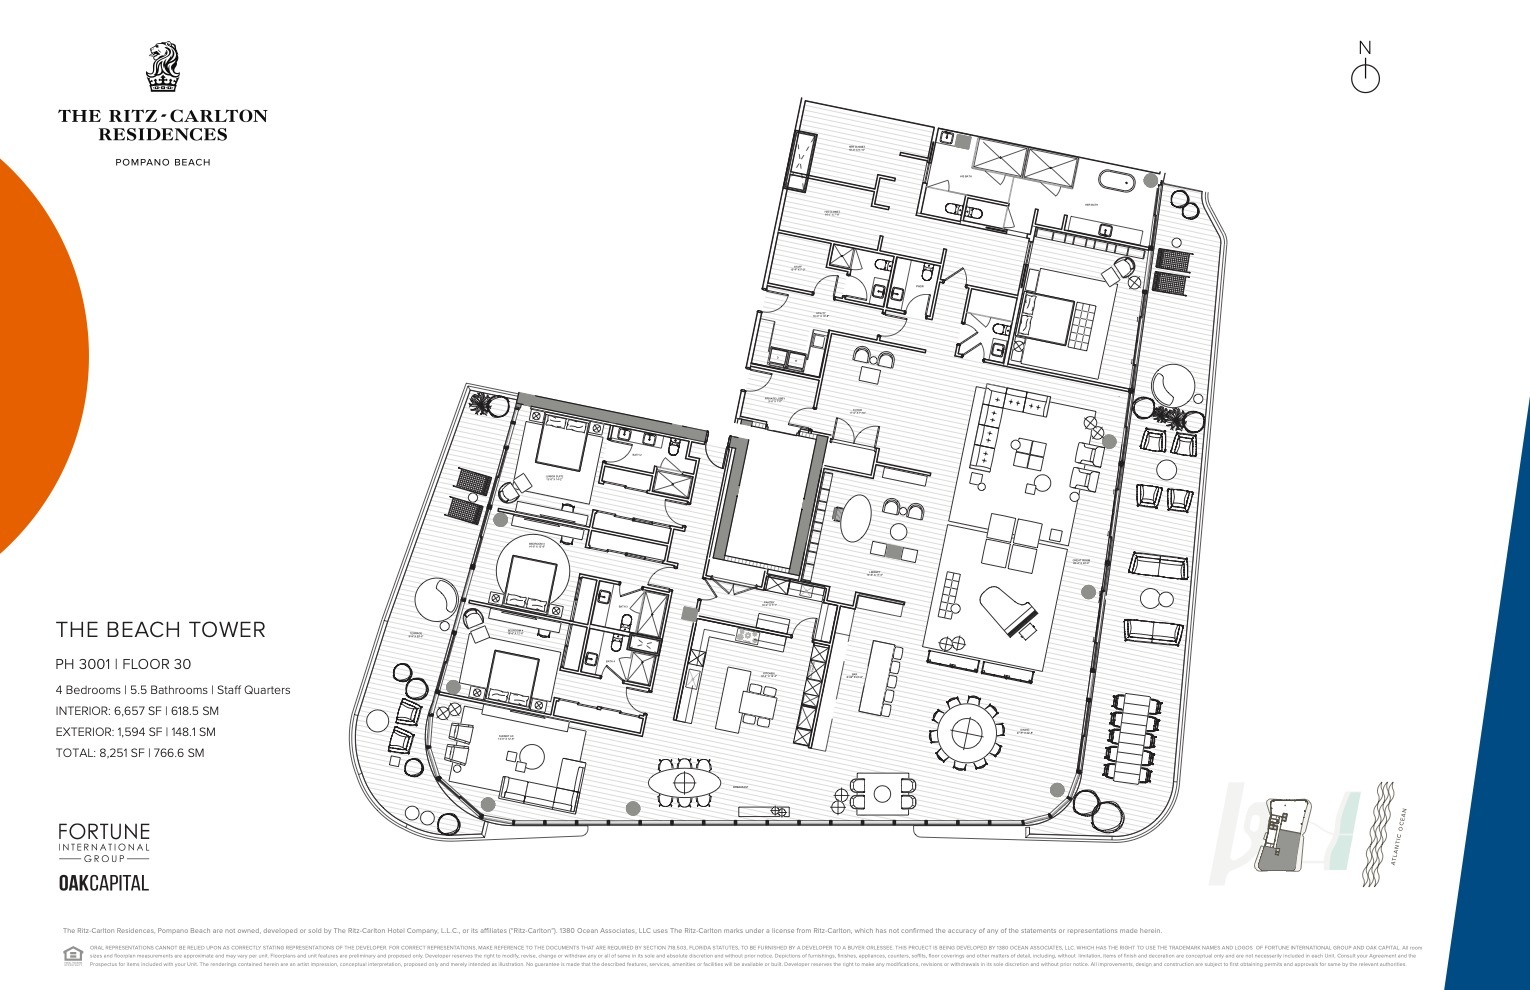 Floor Plan for The Ritz Carlton Pompano Floorplans, The Beach Tower PH 3001